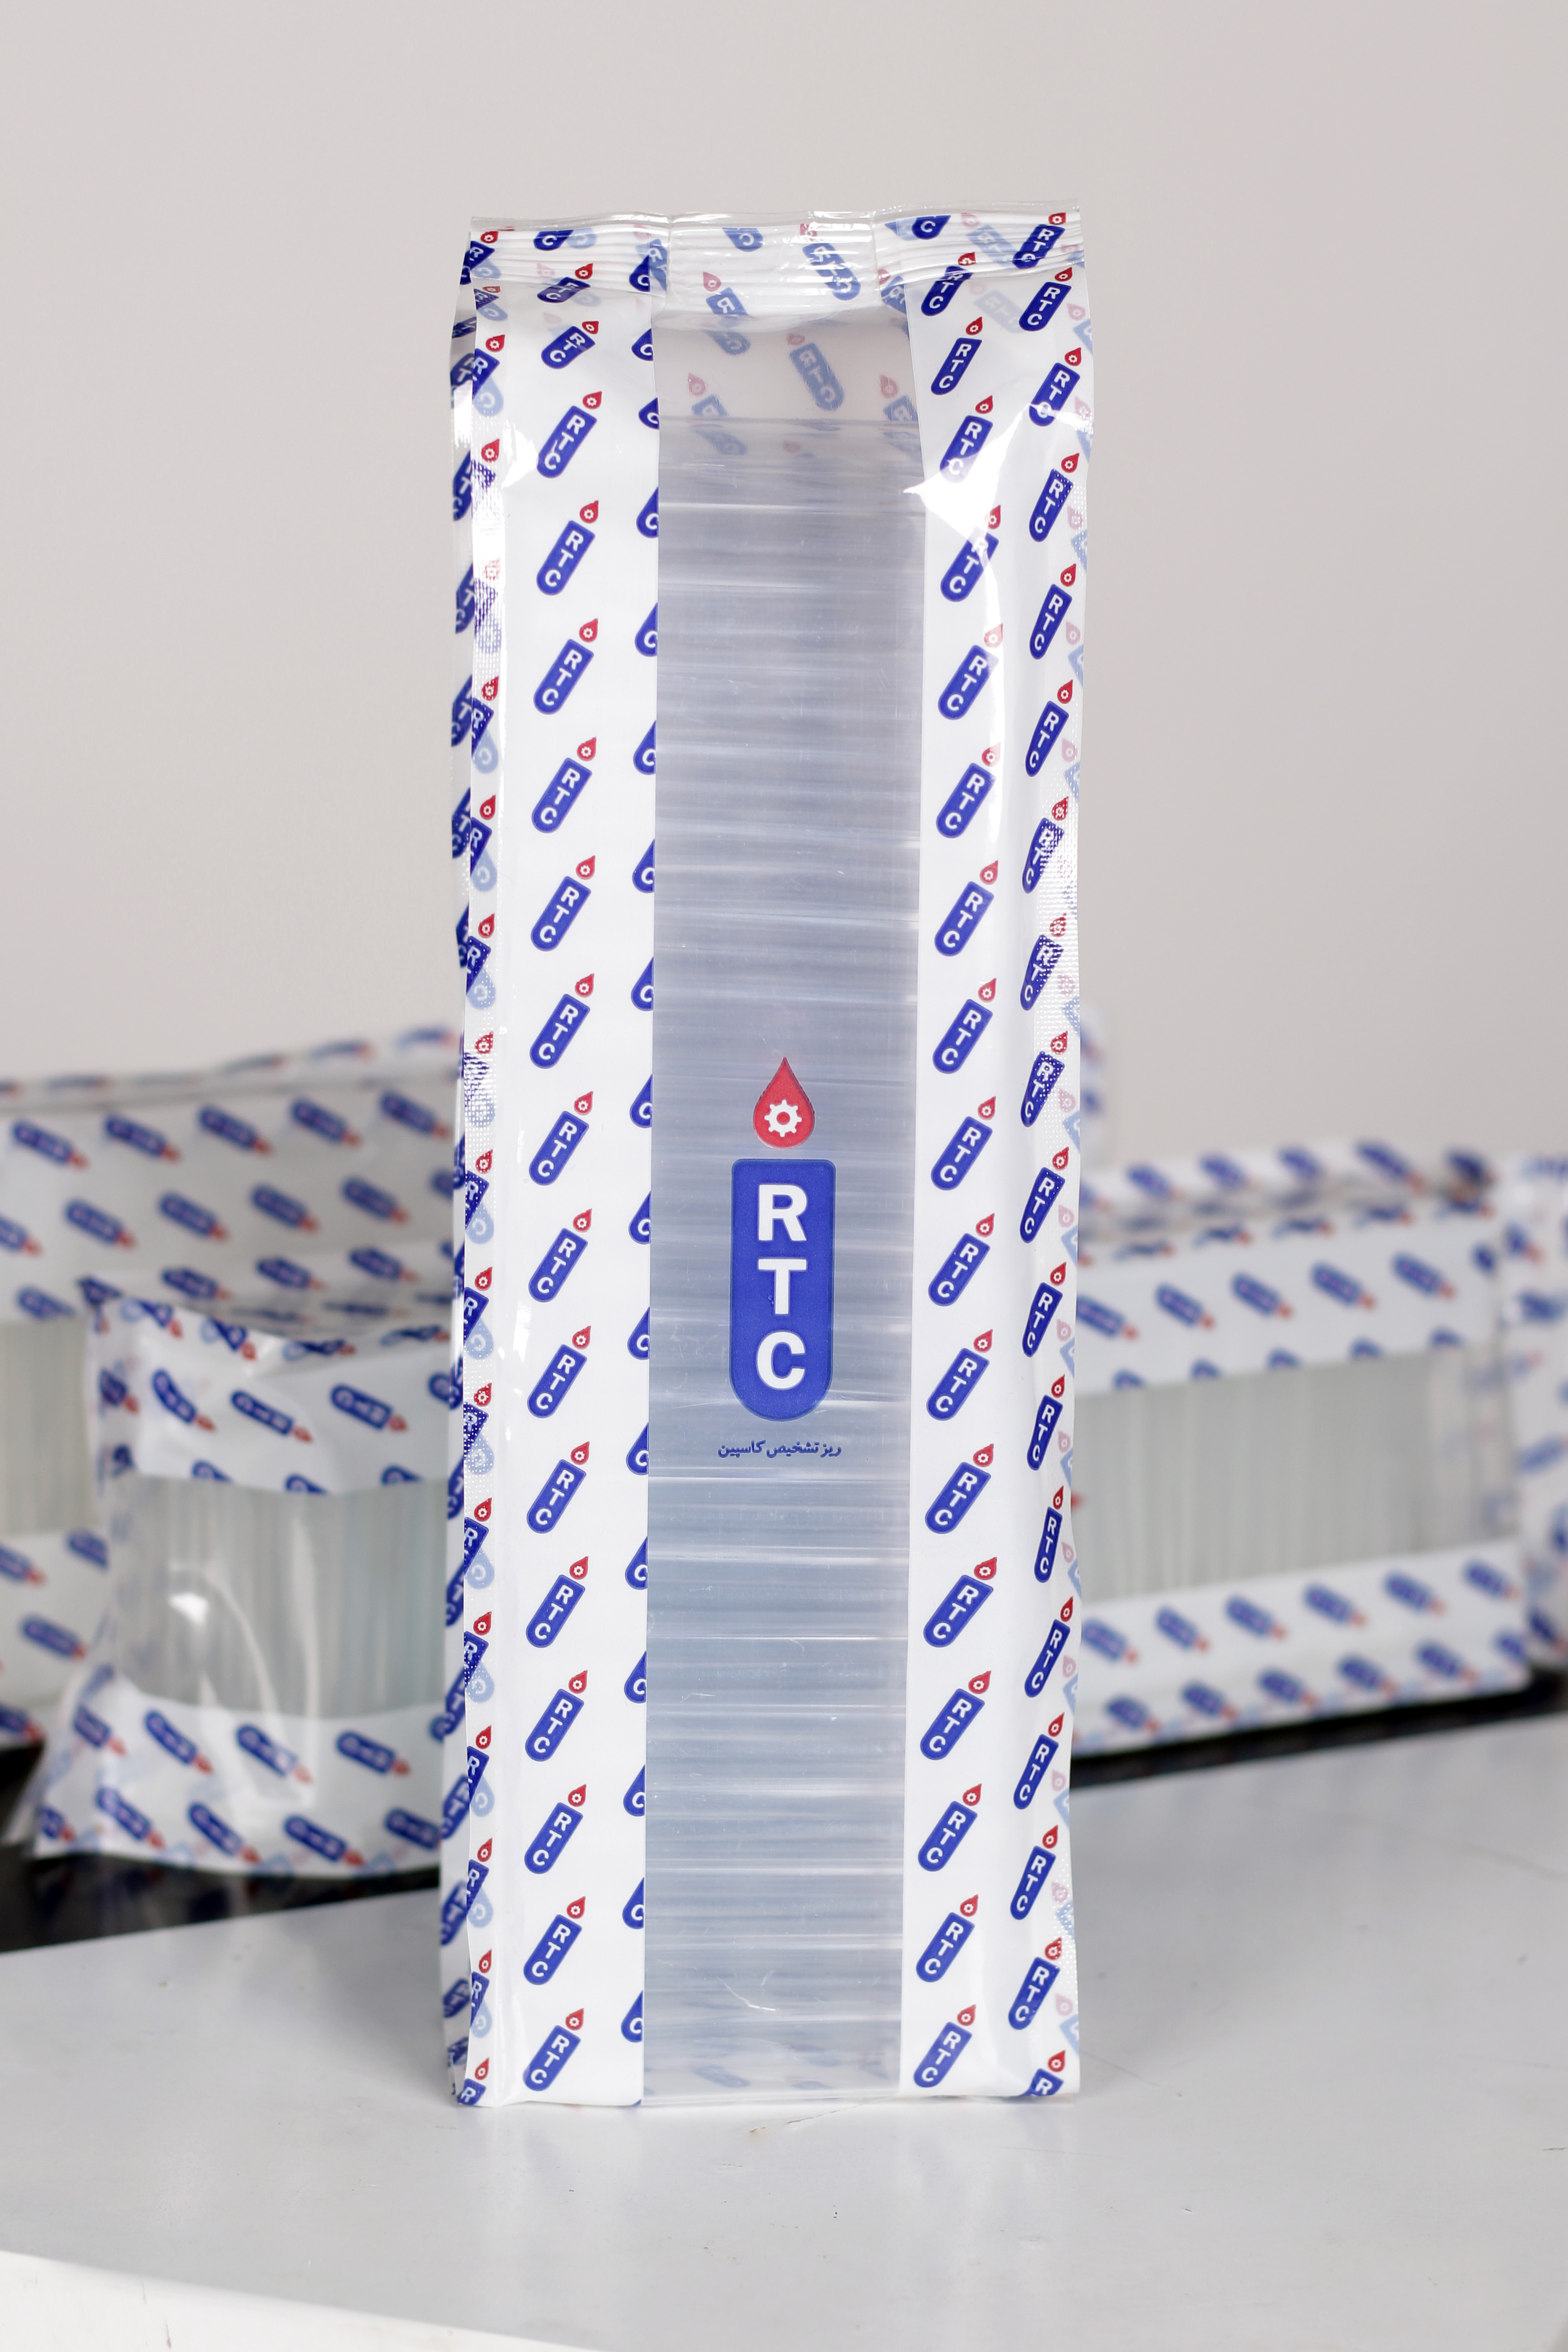 لوله خون گیری ساده غیرمدرج (گاما شفاف) 12x75 - Simple Blood Collection Test Tubes PS 12x75 - RTC - مصرفی - نمونه گیری - ریز تشخیص کاسپین